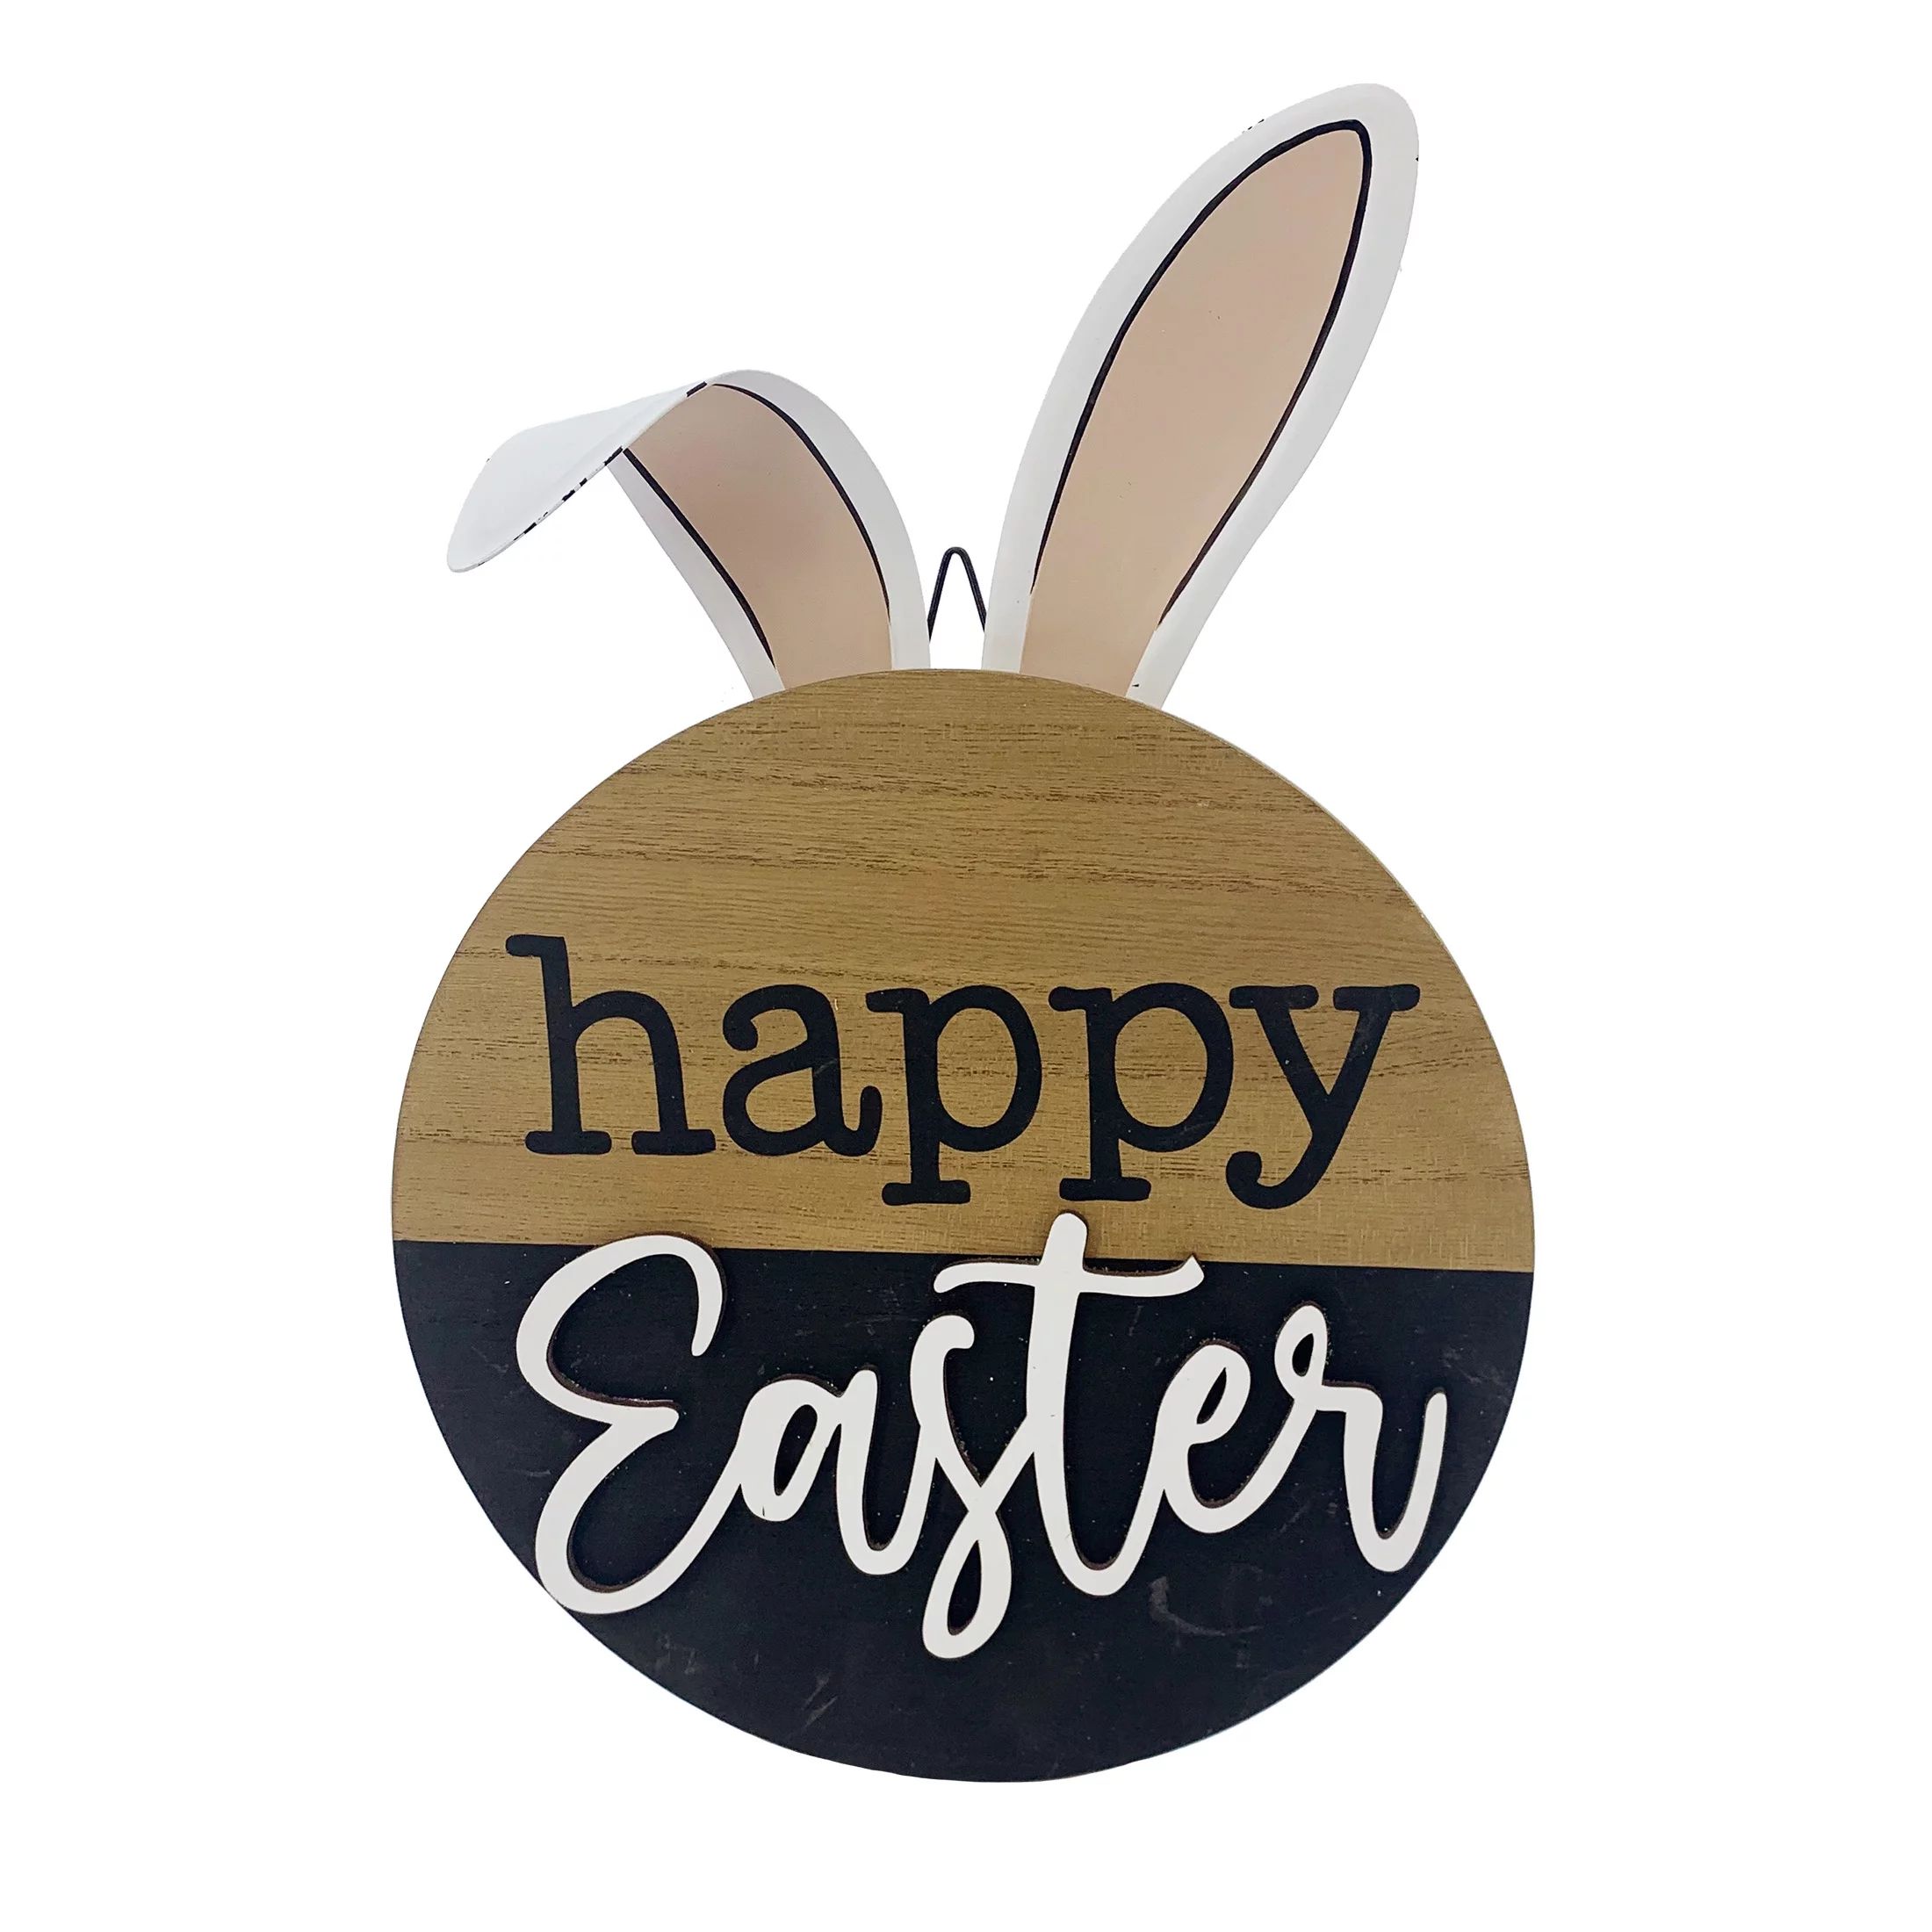 Way To Celebrate Easter Bunny Ears Door Sign Wood Decoration, 11.25" | Walmart (US)